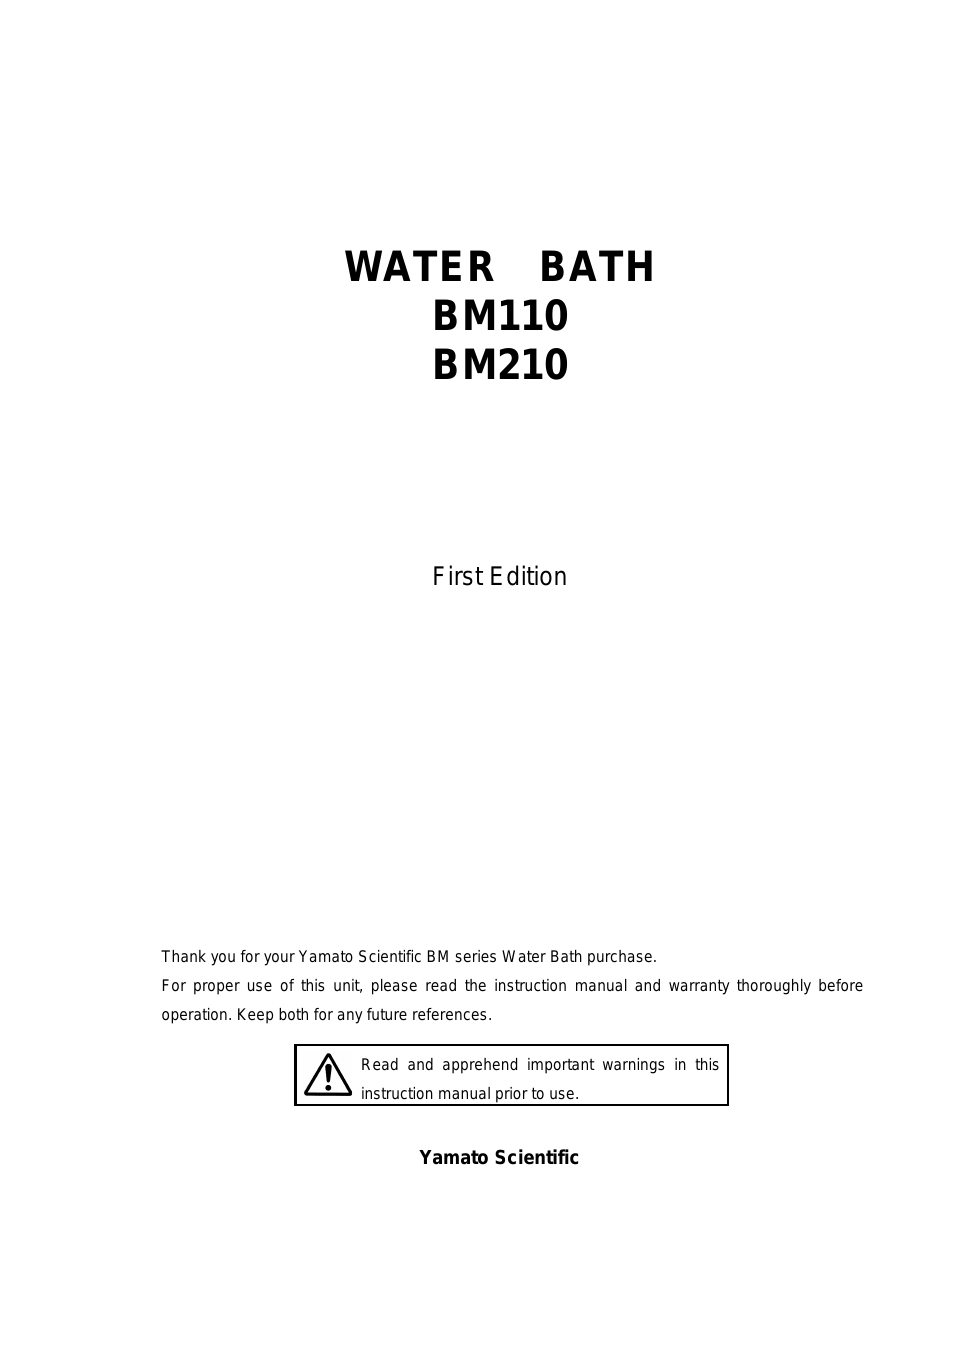 BM110 Water Baths